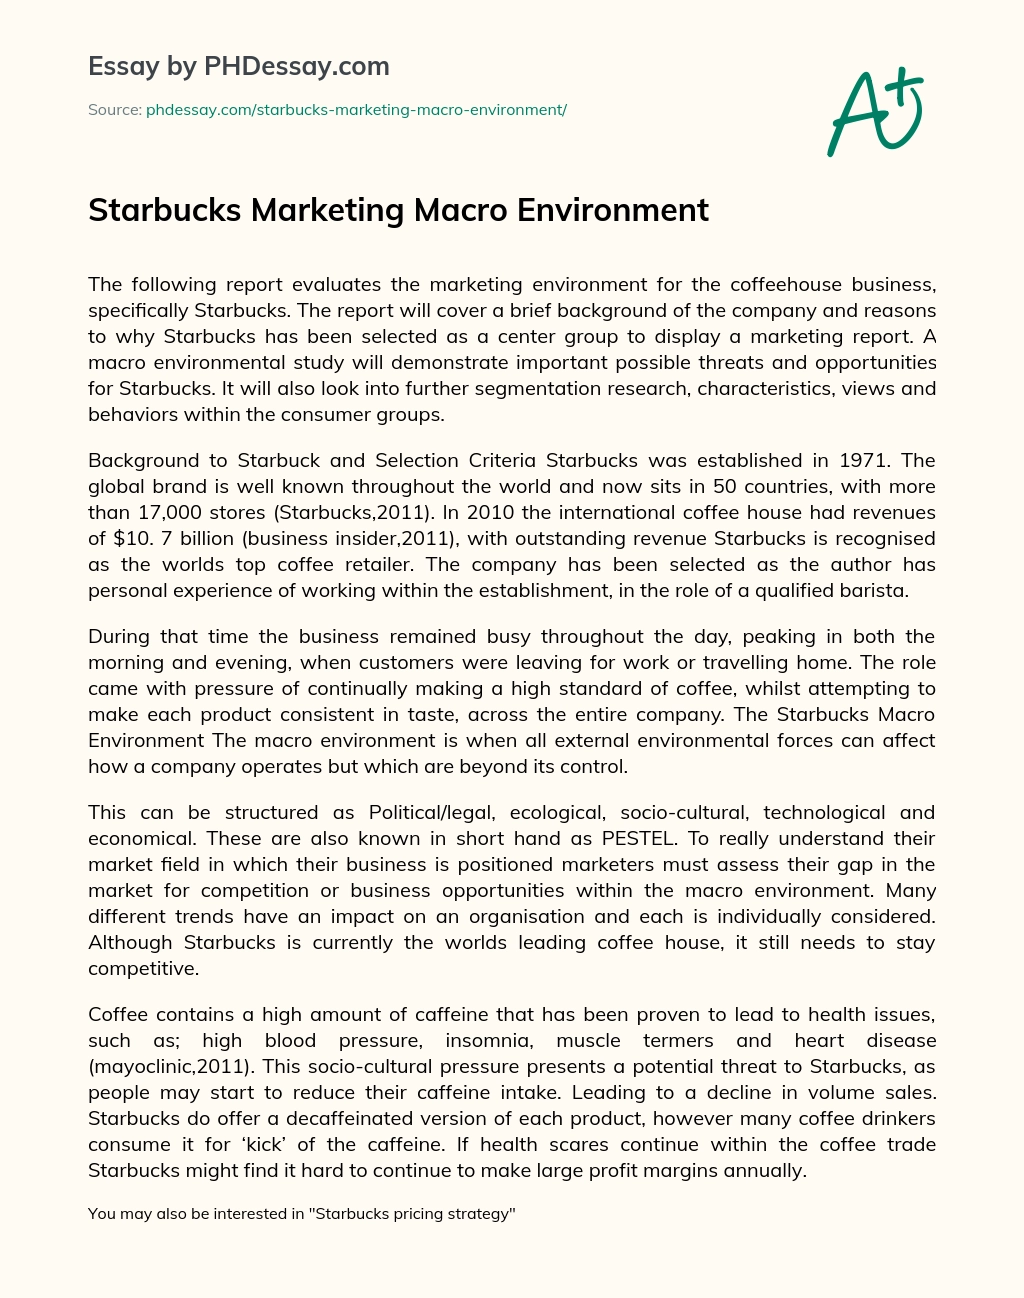 Starbucks Marketing Macro Environment essay